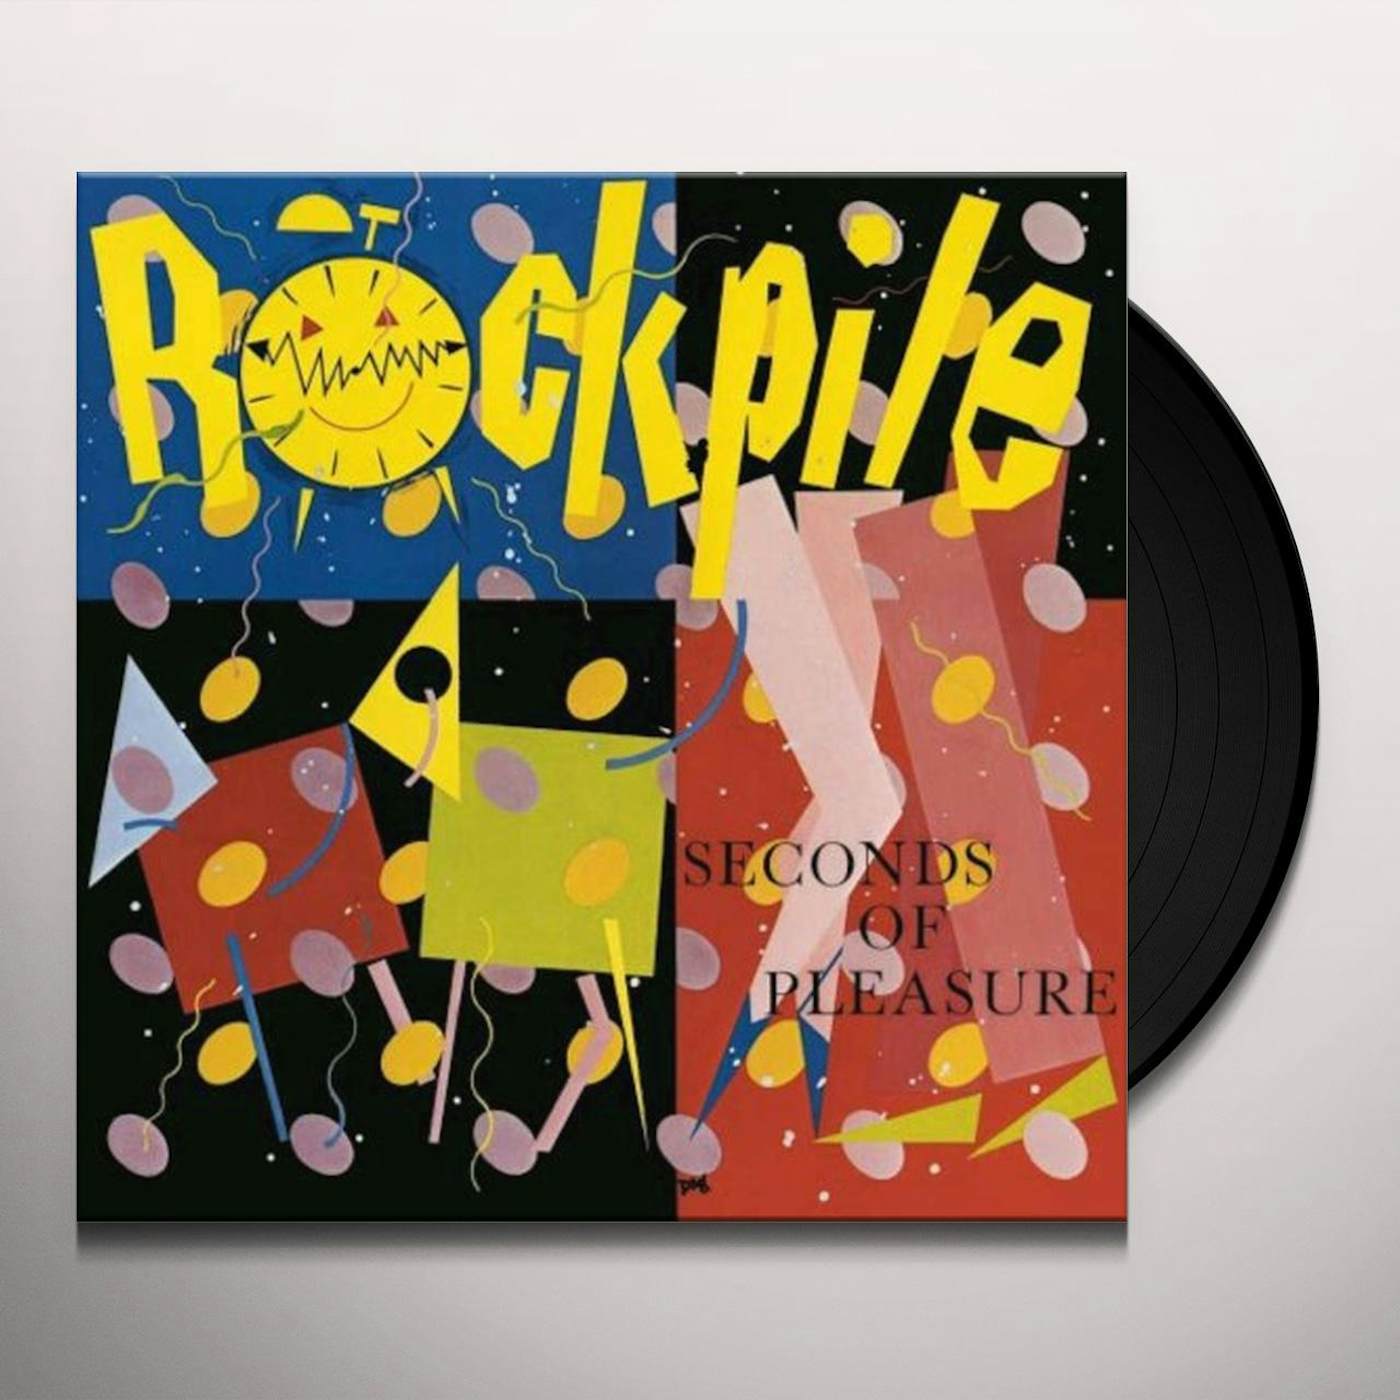 Rockpile Seconds Of Pleasure Vinyl Record